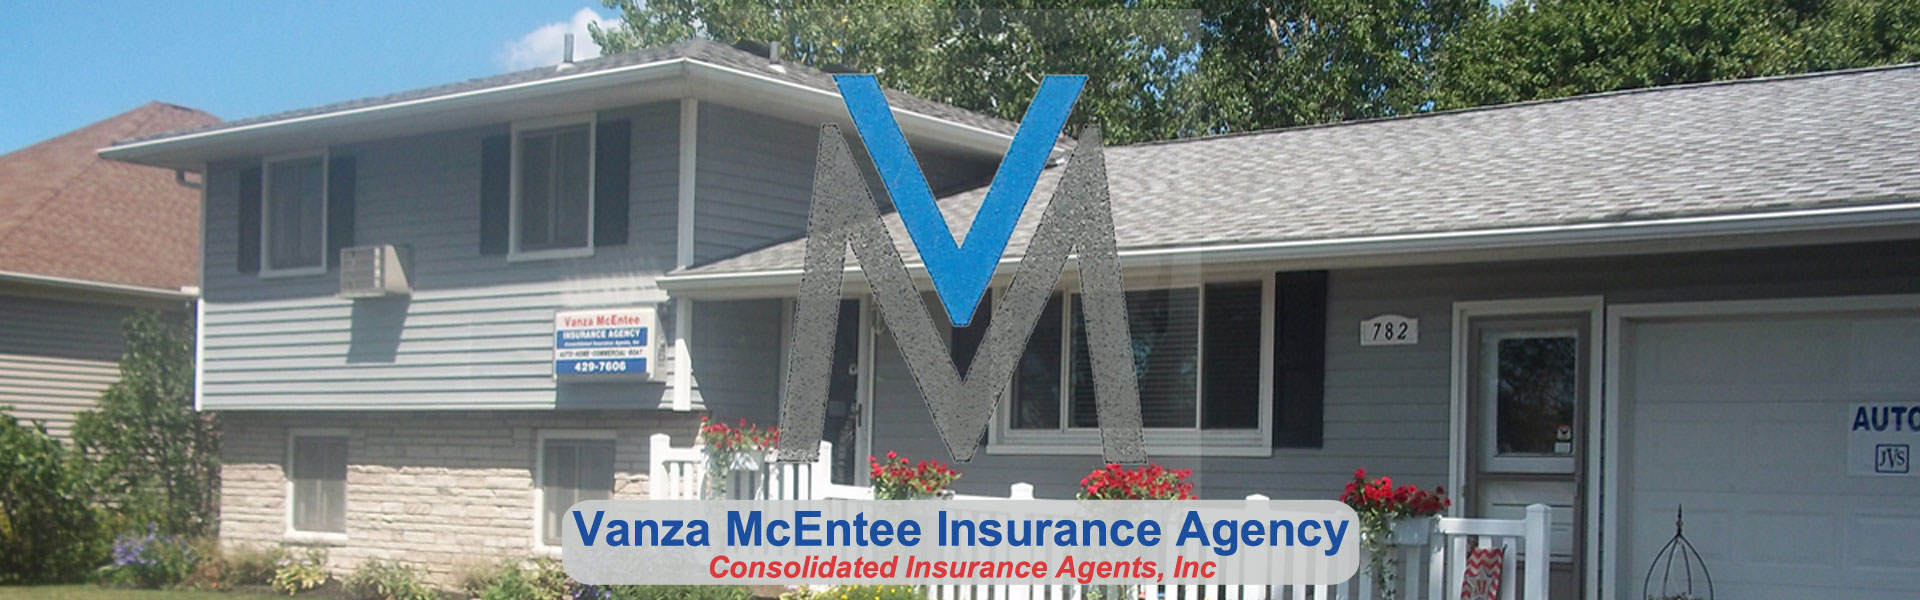 Vanza McEntee Insurance Agency